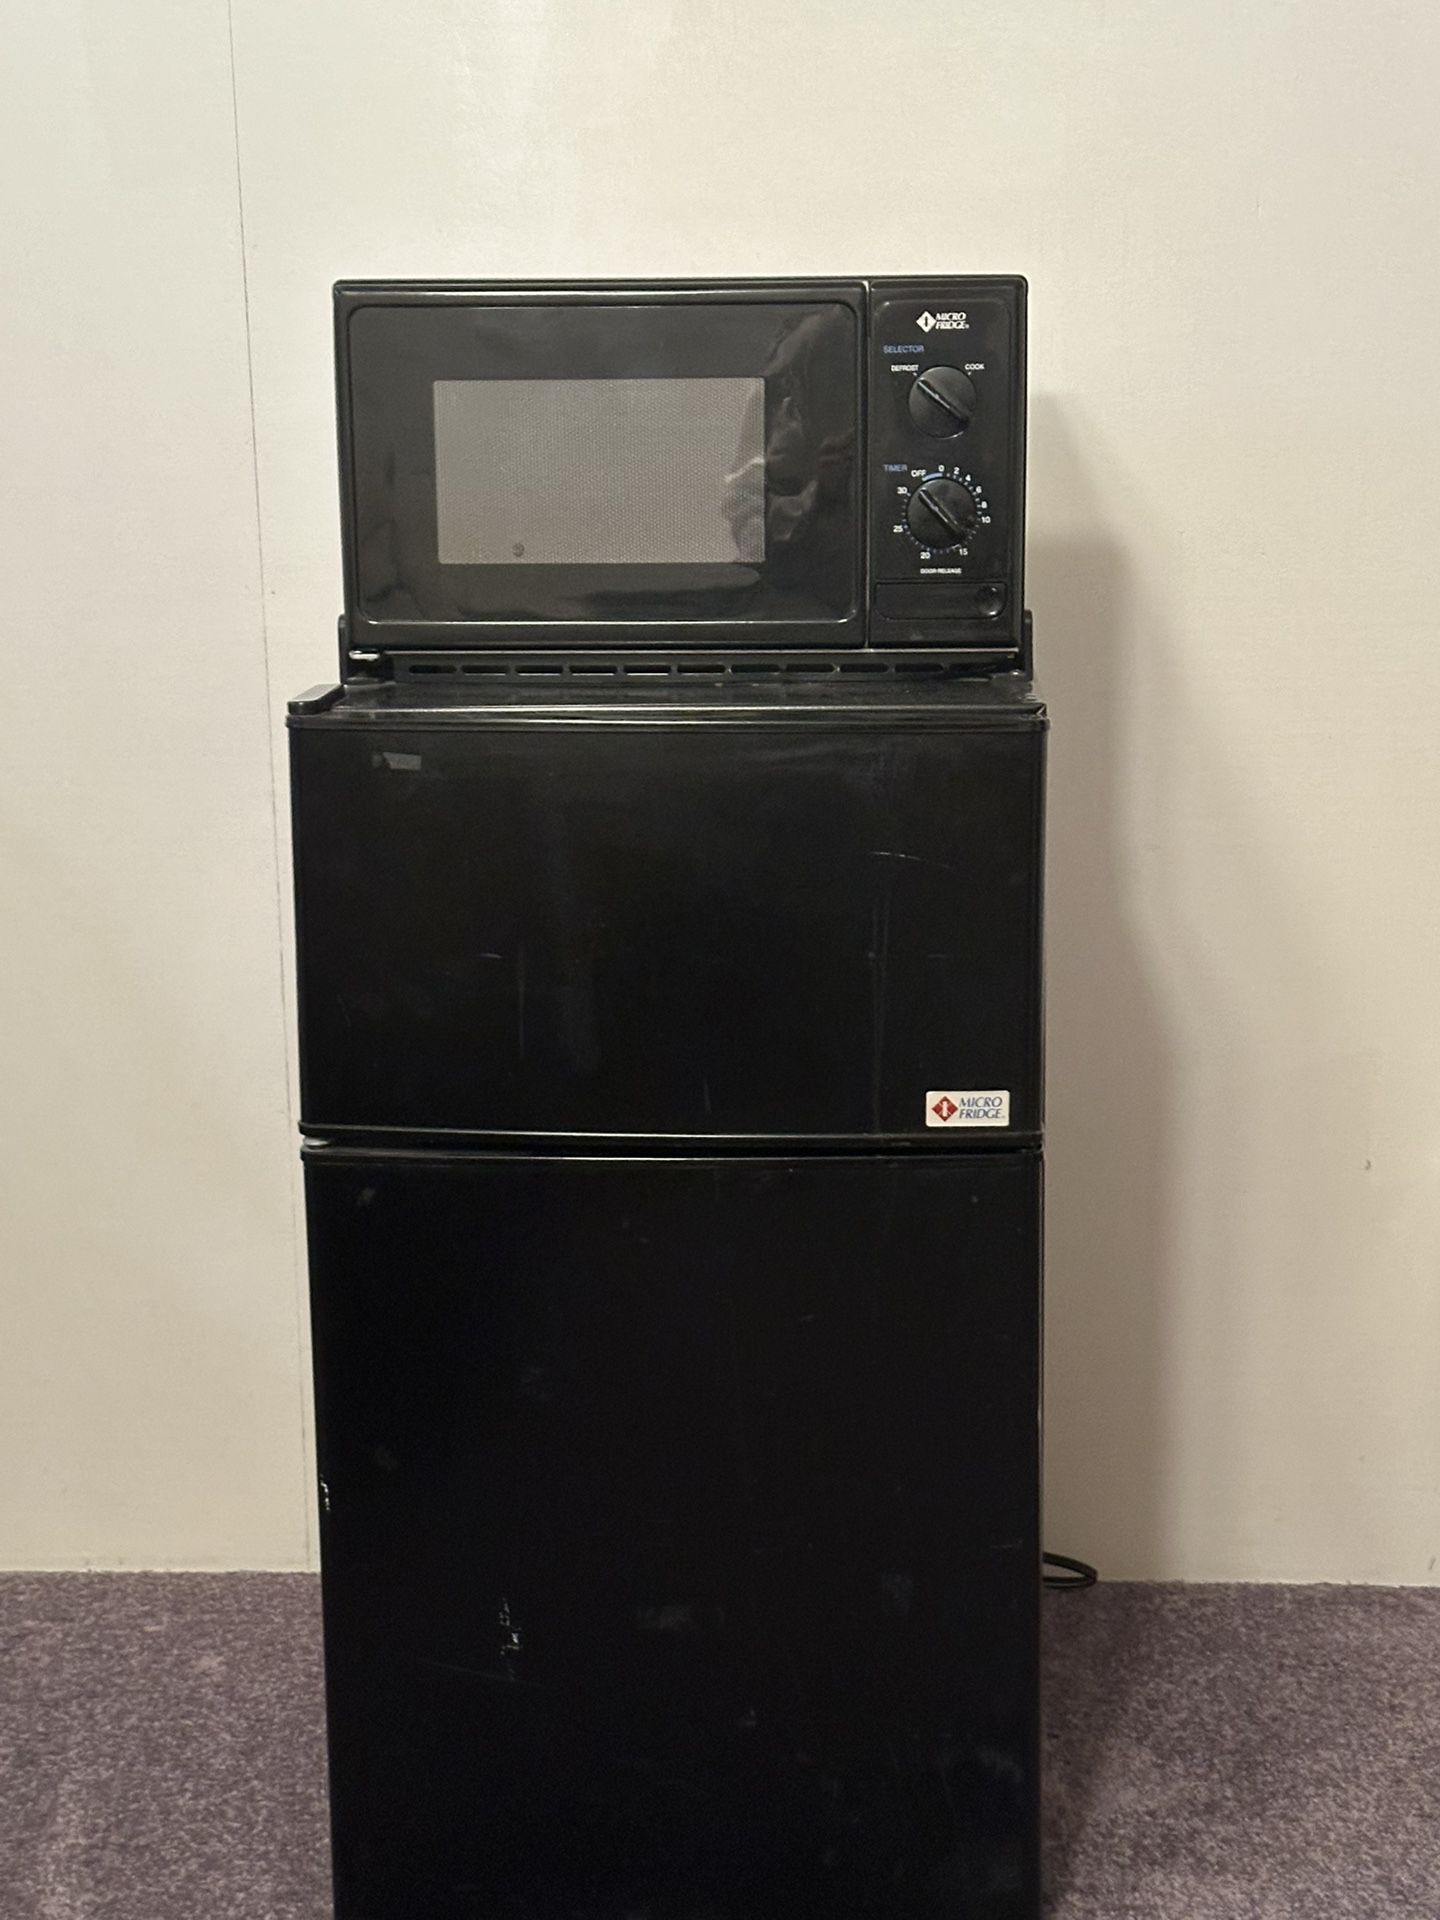 Mini Refrigerator with Microwave